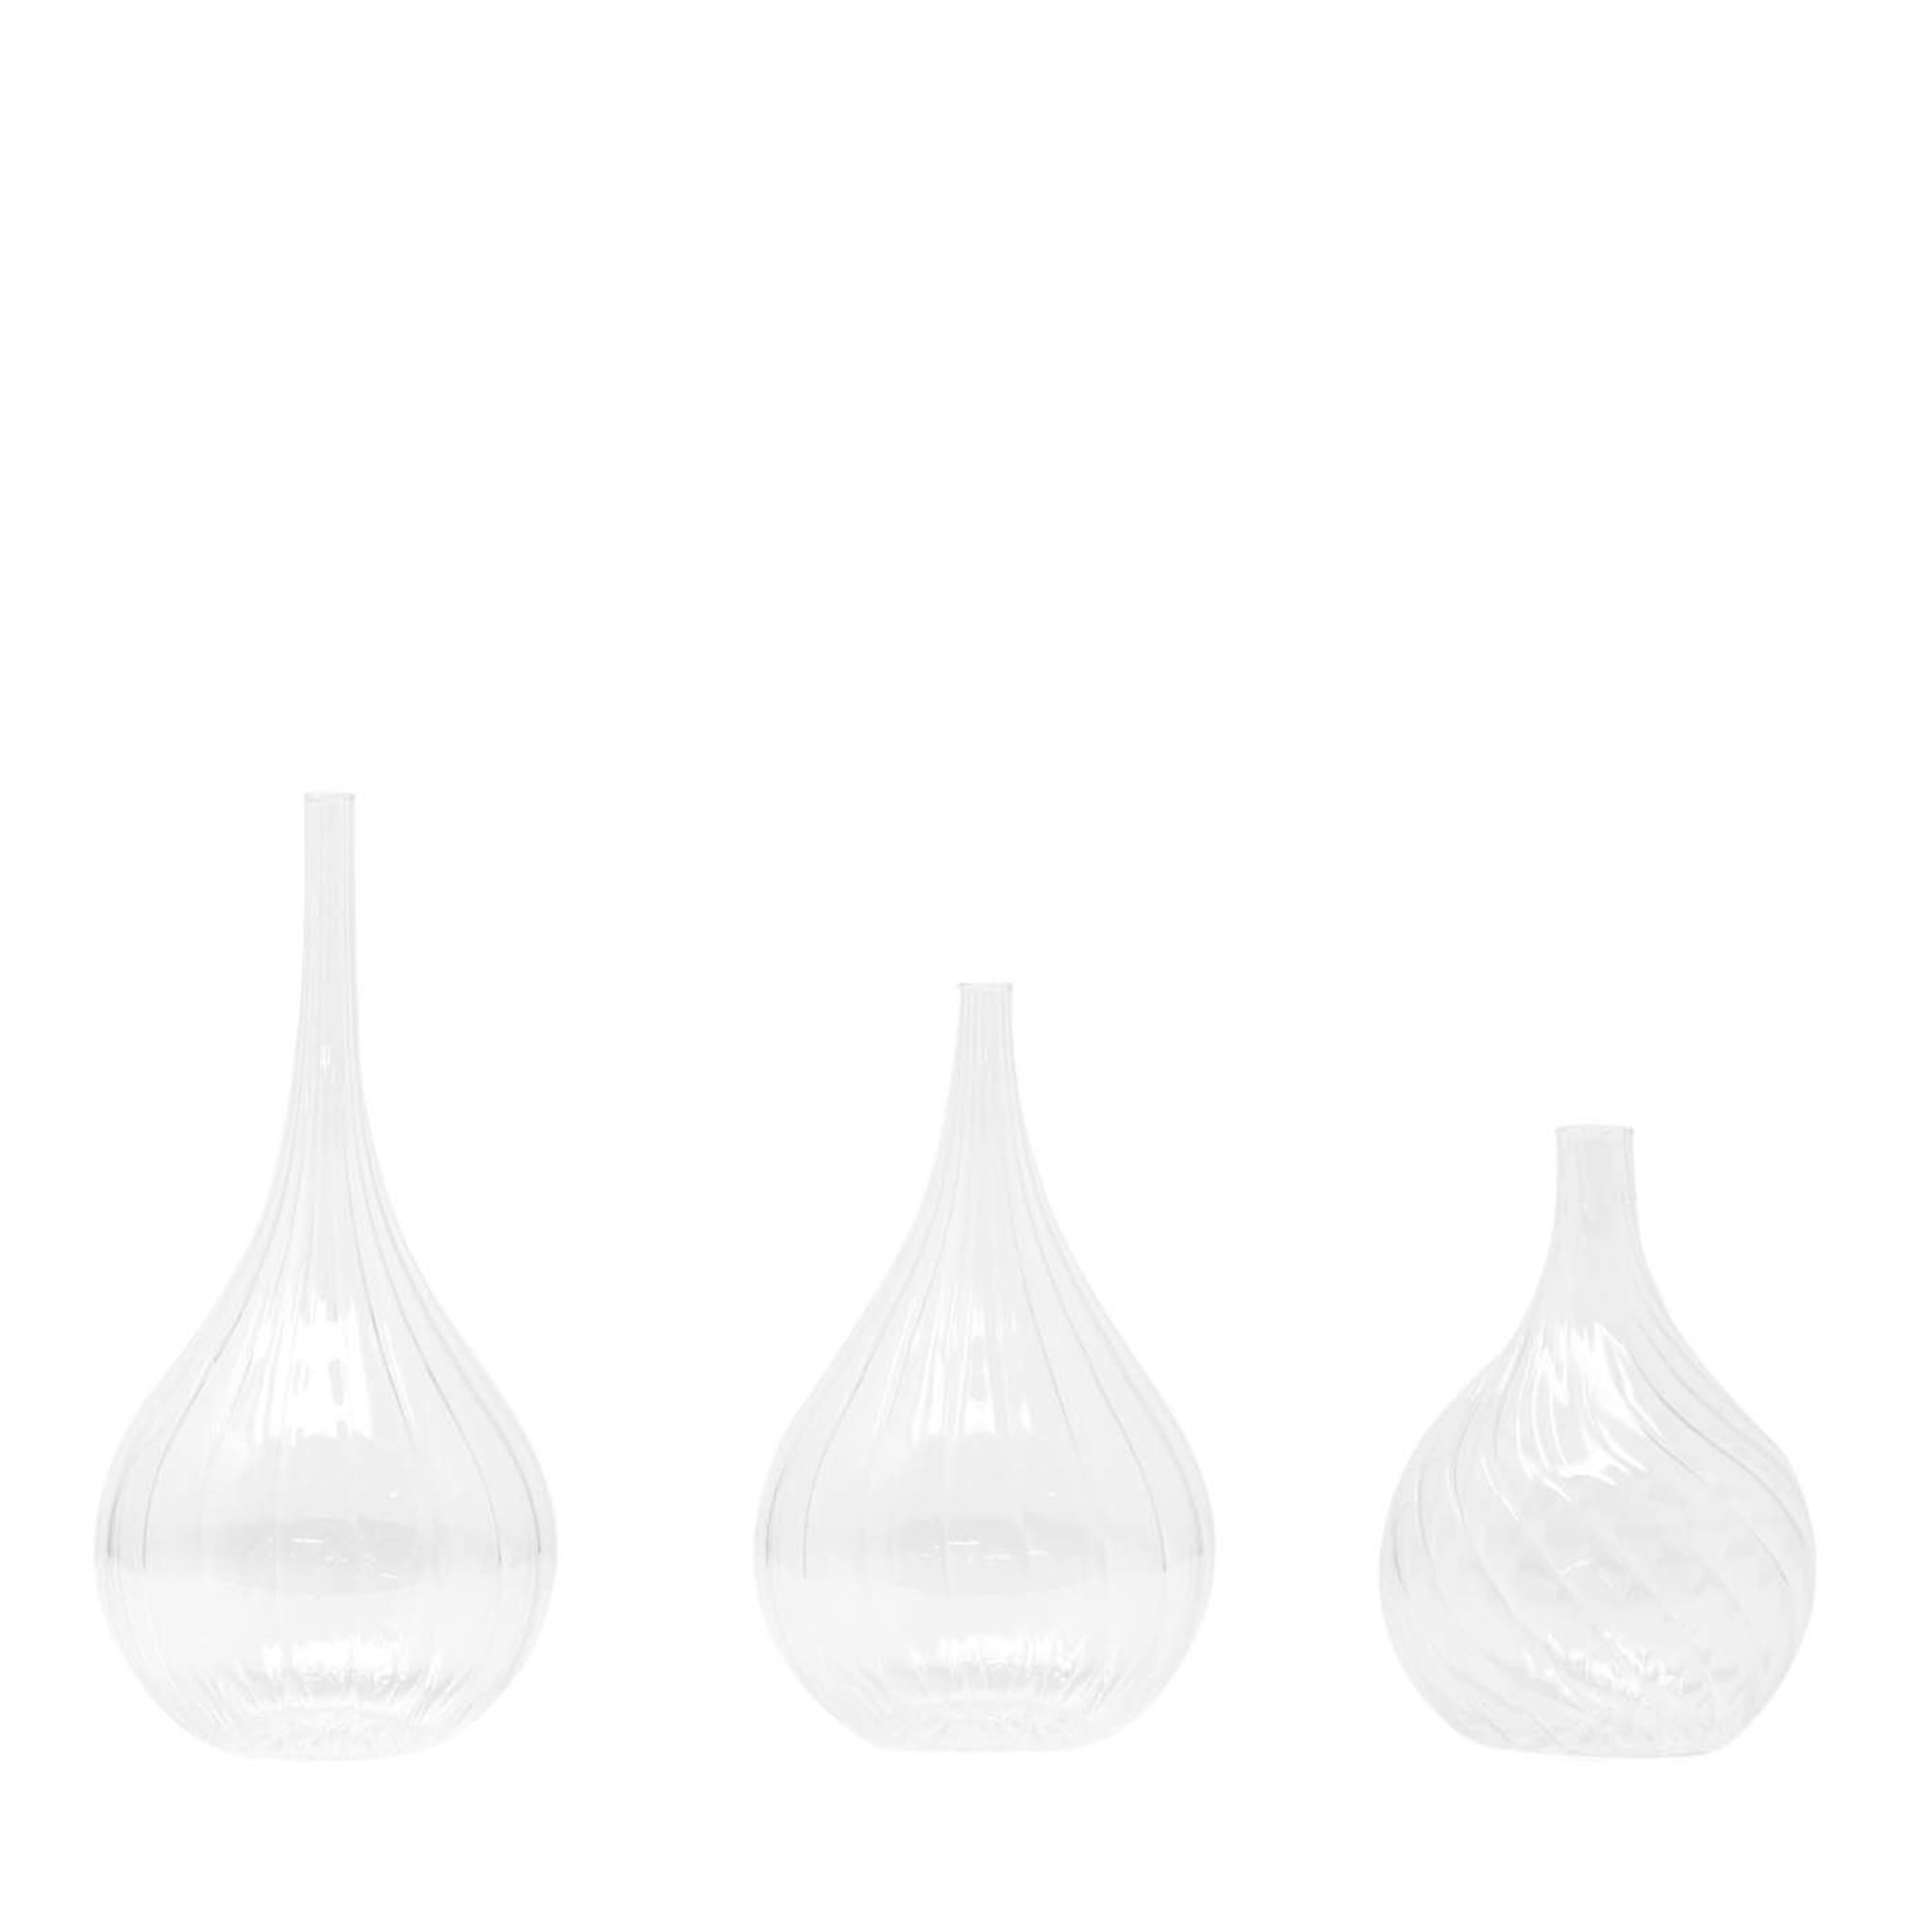 Lukovki Set of 3 Vases - Main view